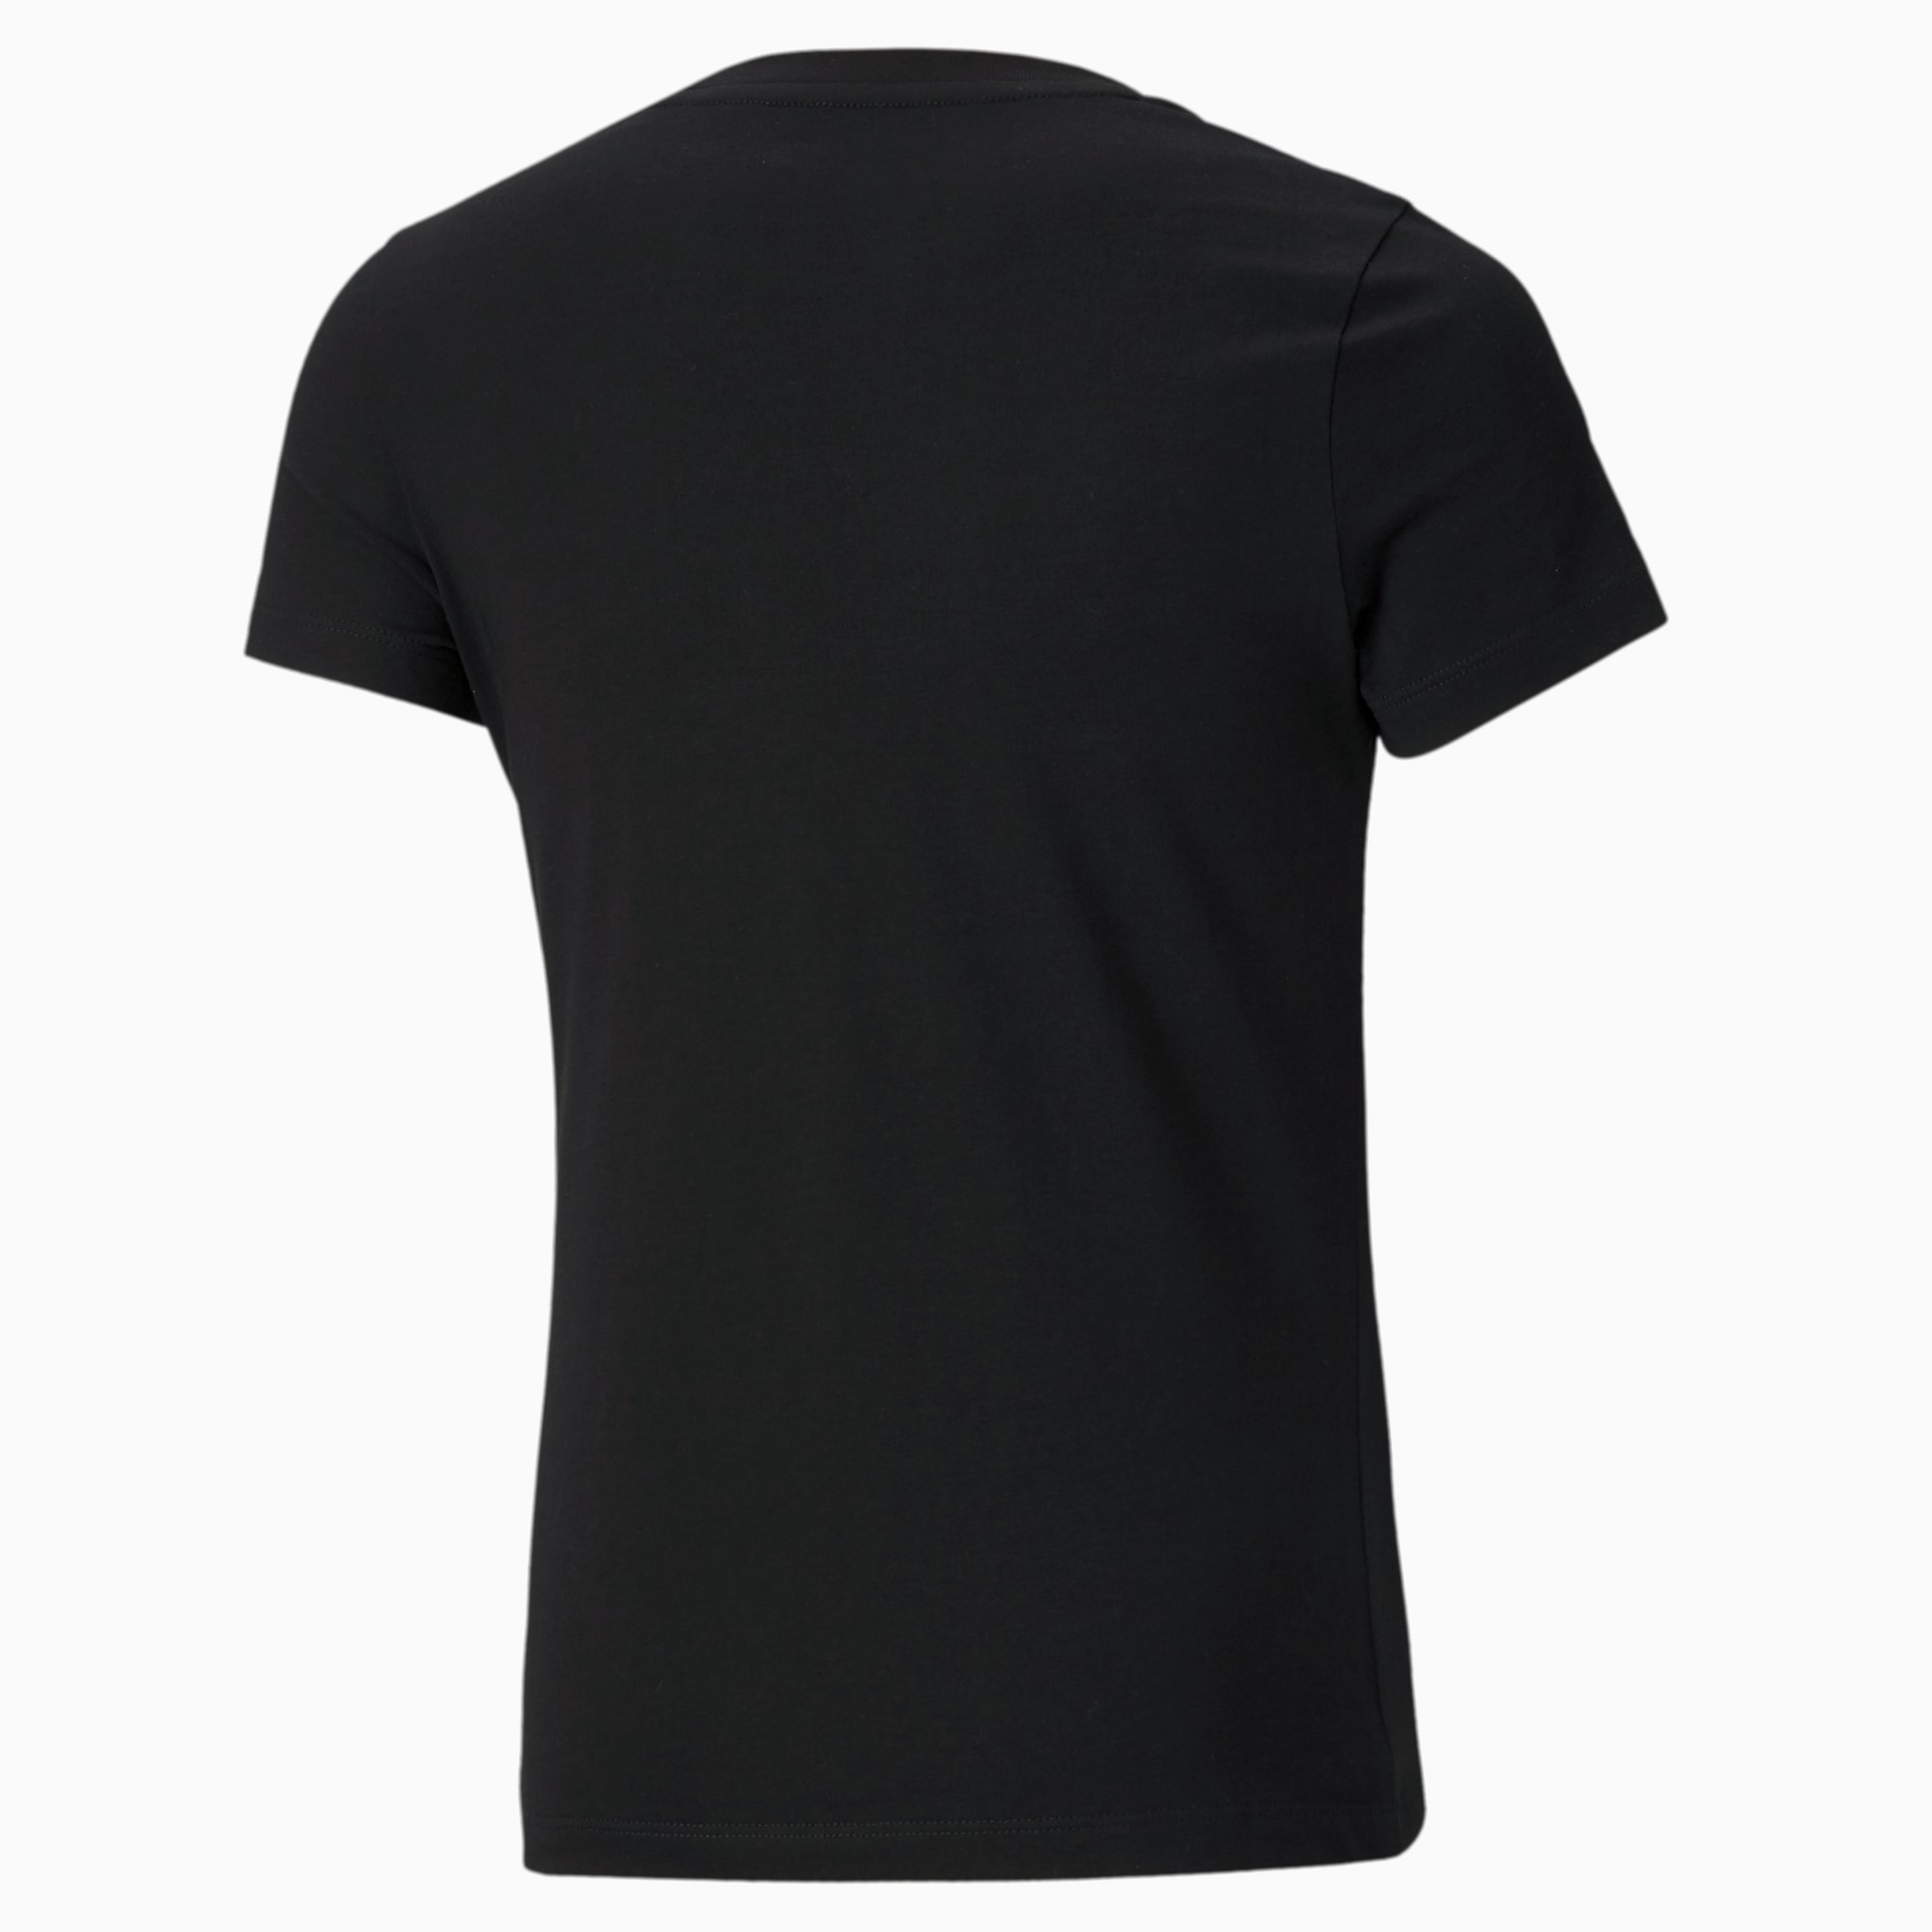 PUMA Classics Logo Youth T-Shirt, Black